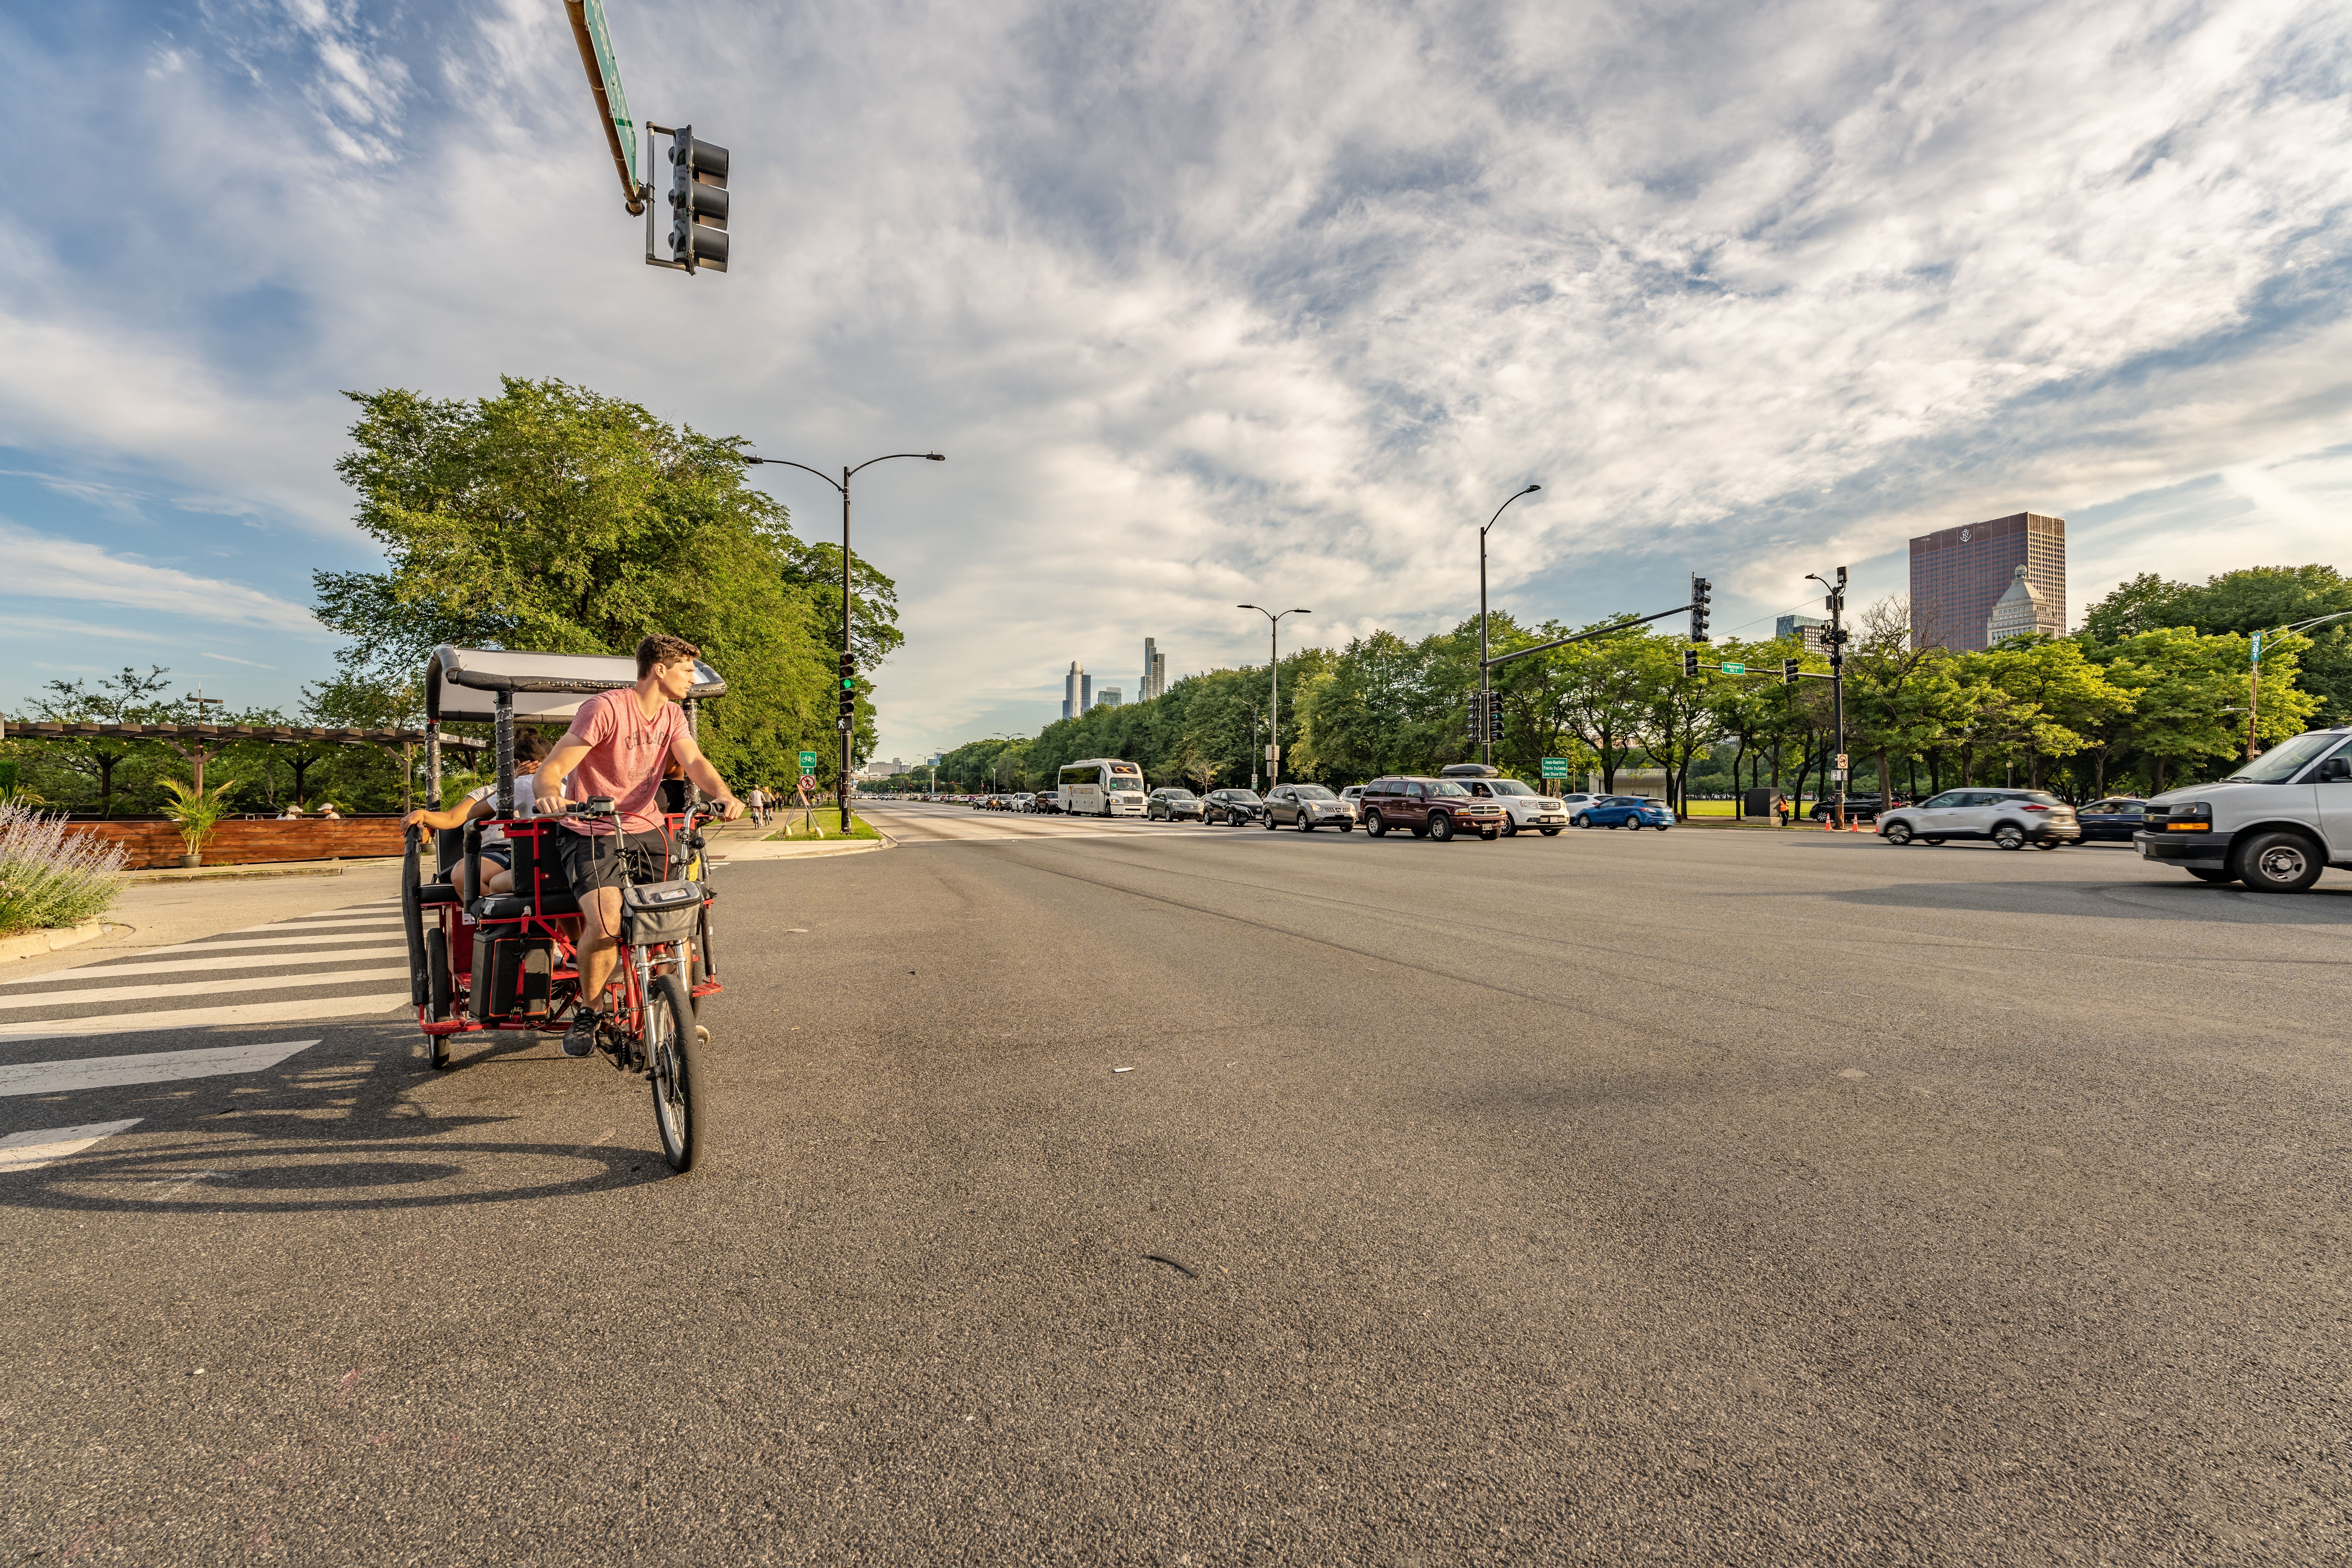 A pedicab driver carrying tourists